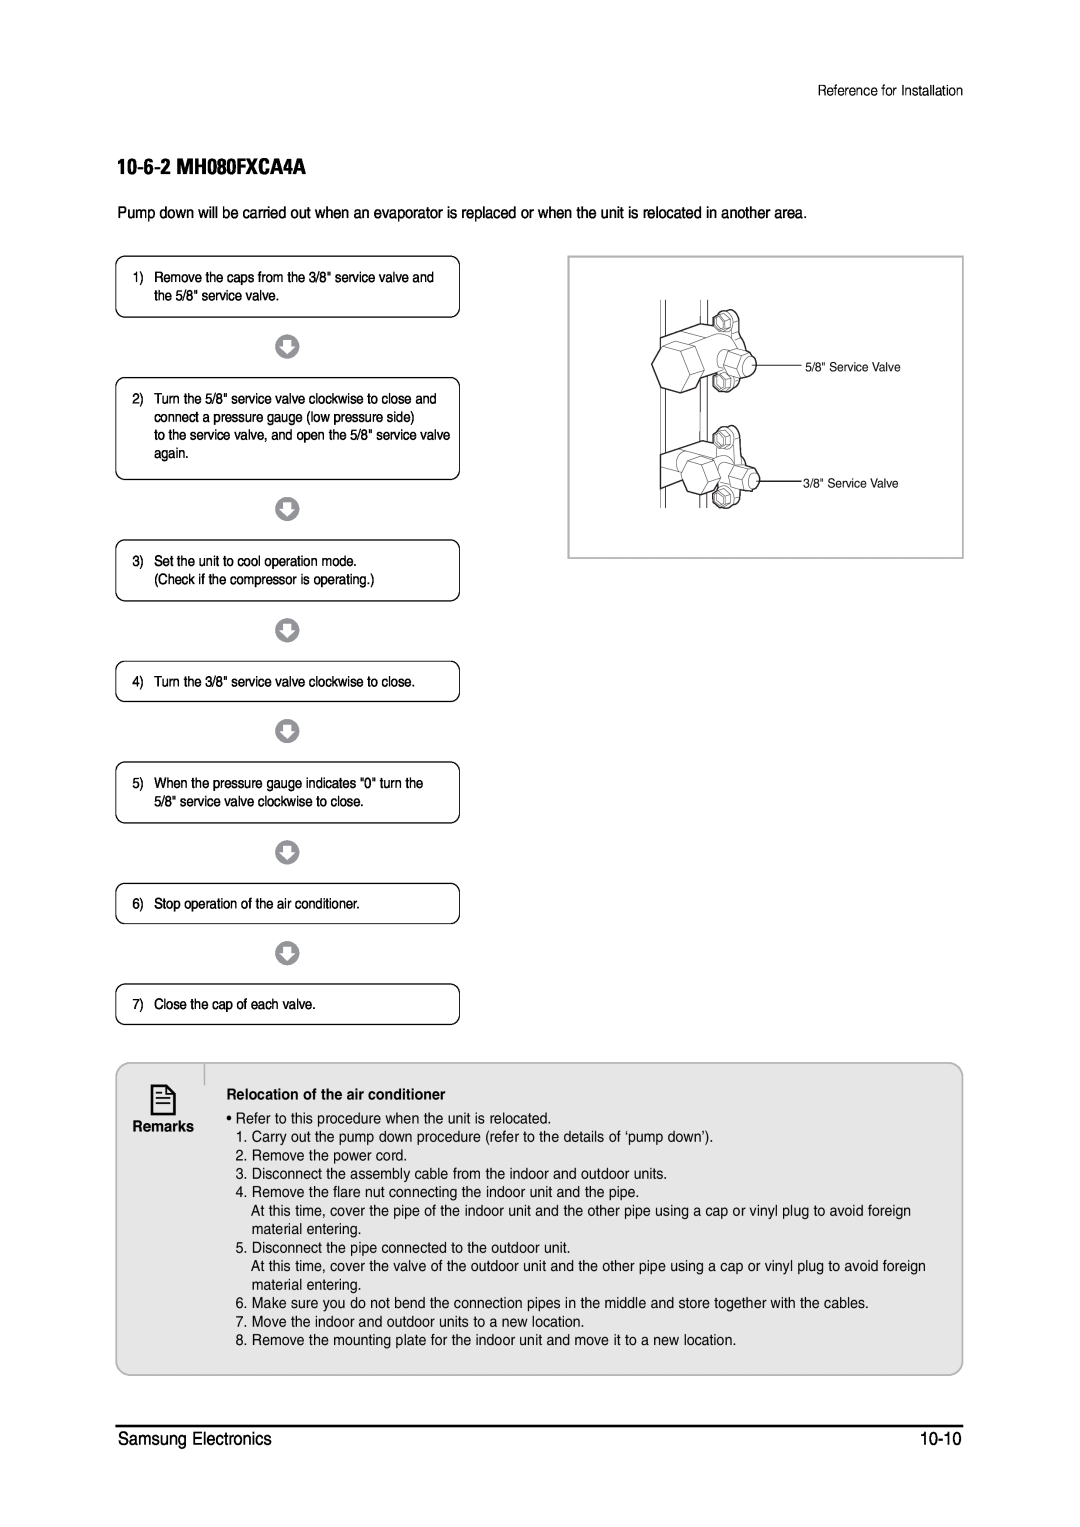 Samsung MH026FNCA service manual 10-6-2MH080FXCA4A, Samsung Electronics, 10-10 